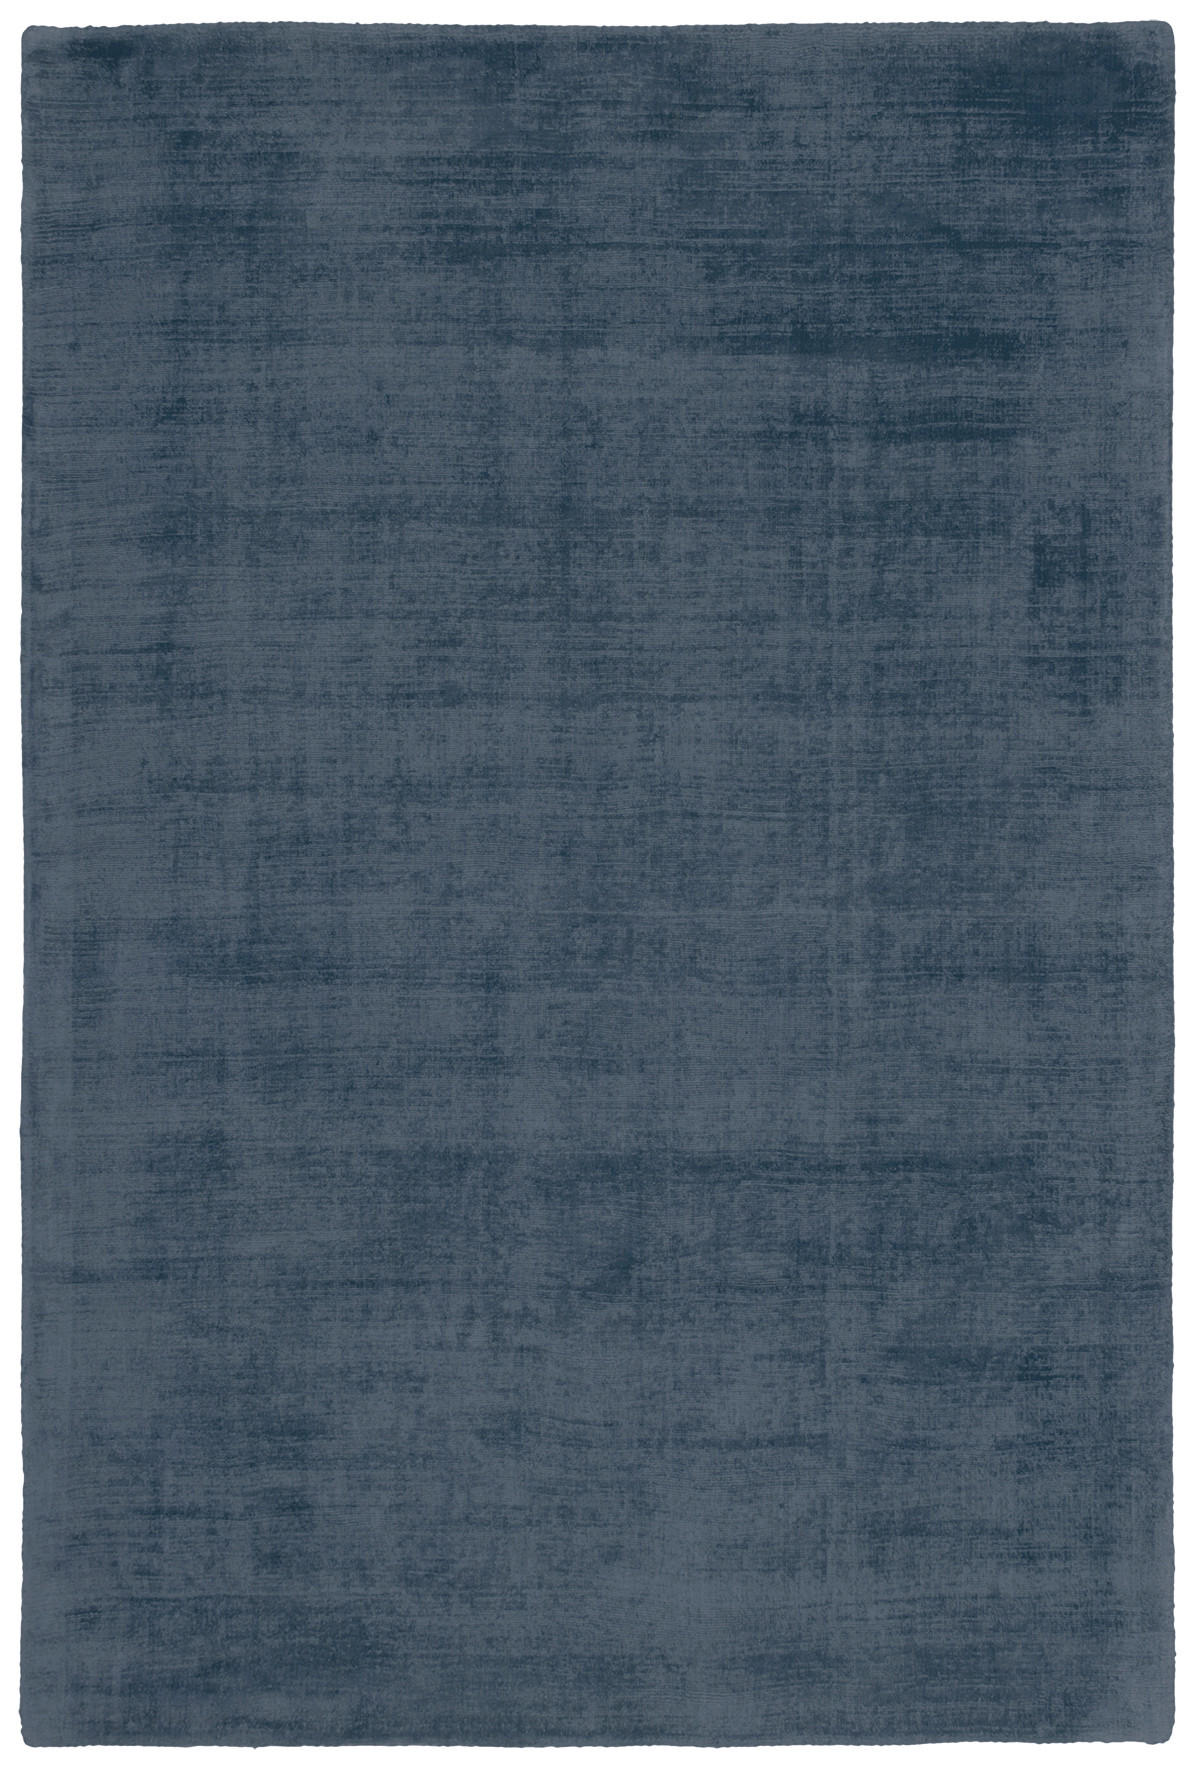 FLACHWEBETEPPICH 80/150 cm  - Dunkelblau, Basics, Textil (80/150cm) - Novel